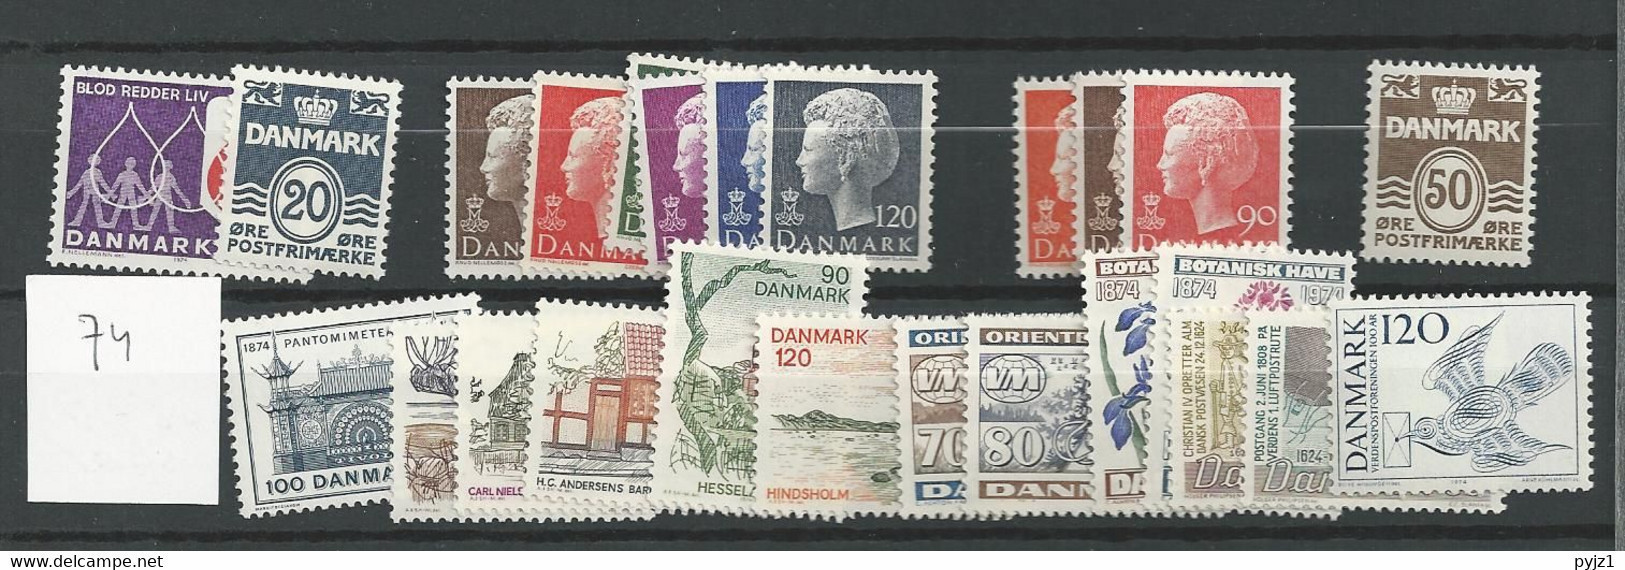 1974 MNH Denmark, Year Complete, Postfris** - Volledig Jaar